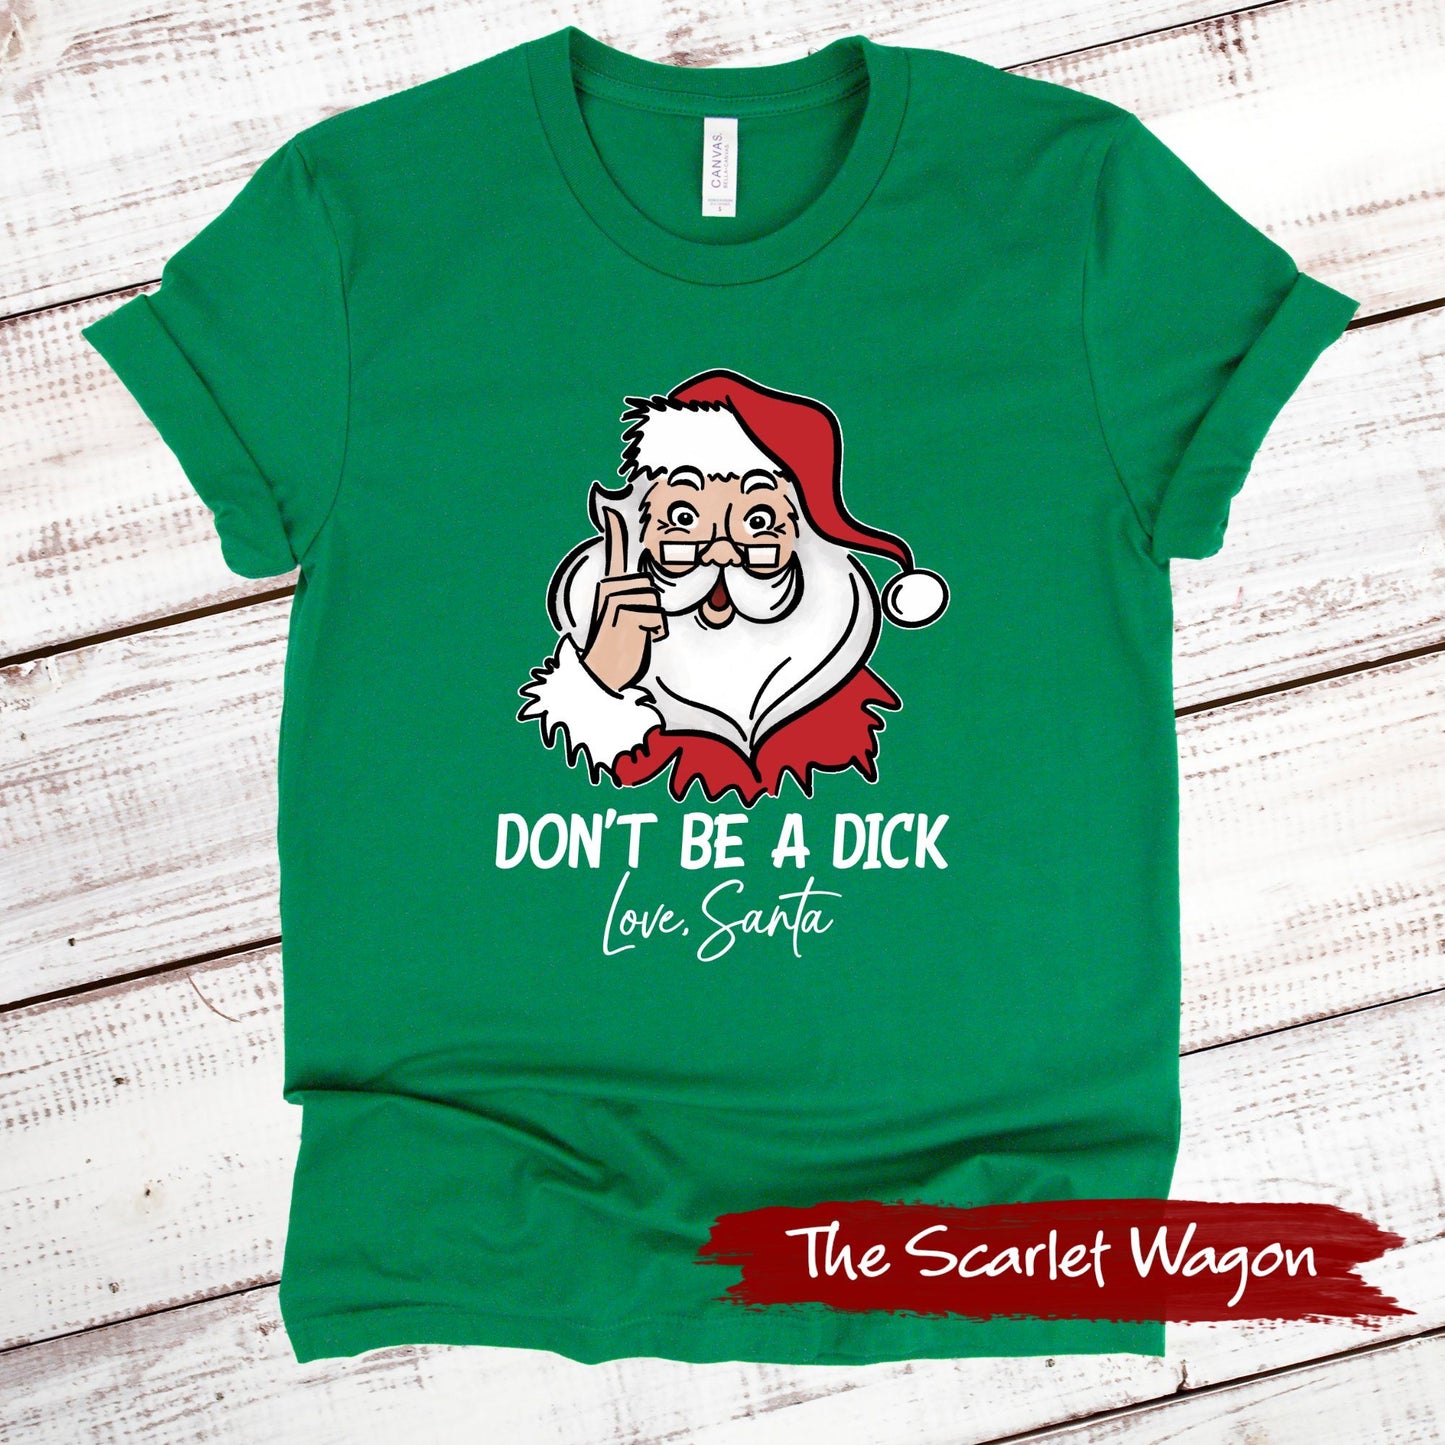 Don't Be a Dick - Love, Santa Christmas Shirt Scarlet Wagon Green XS 